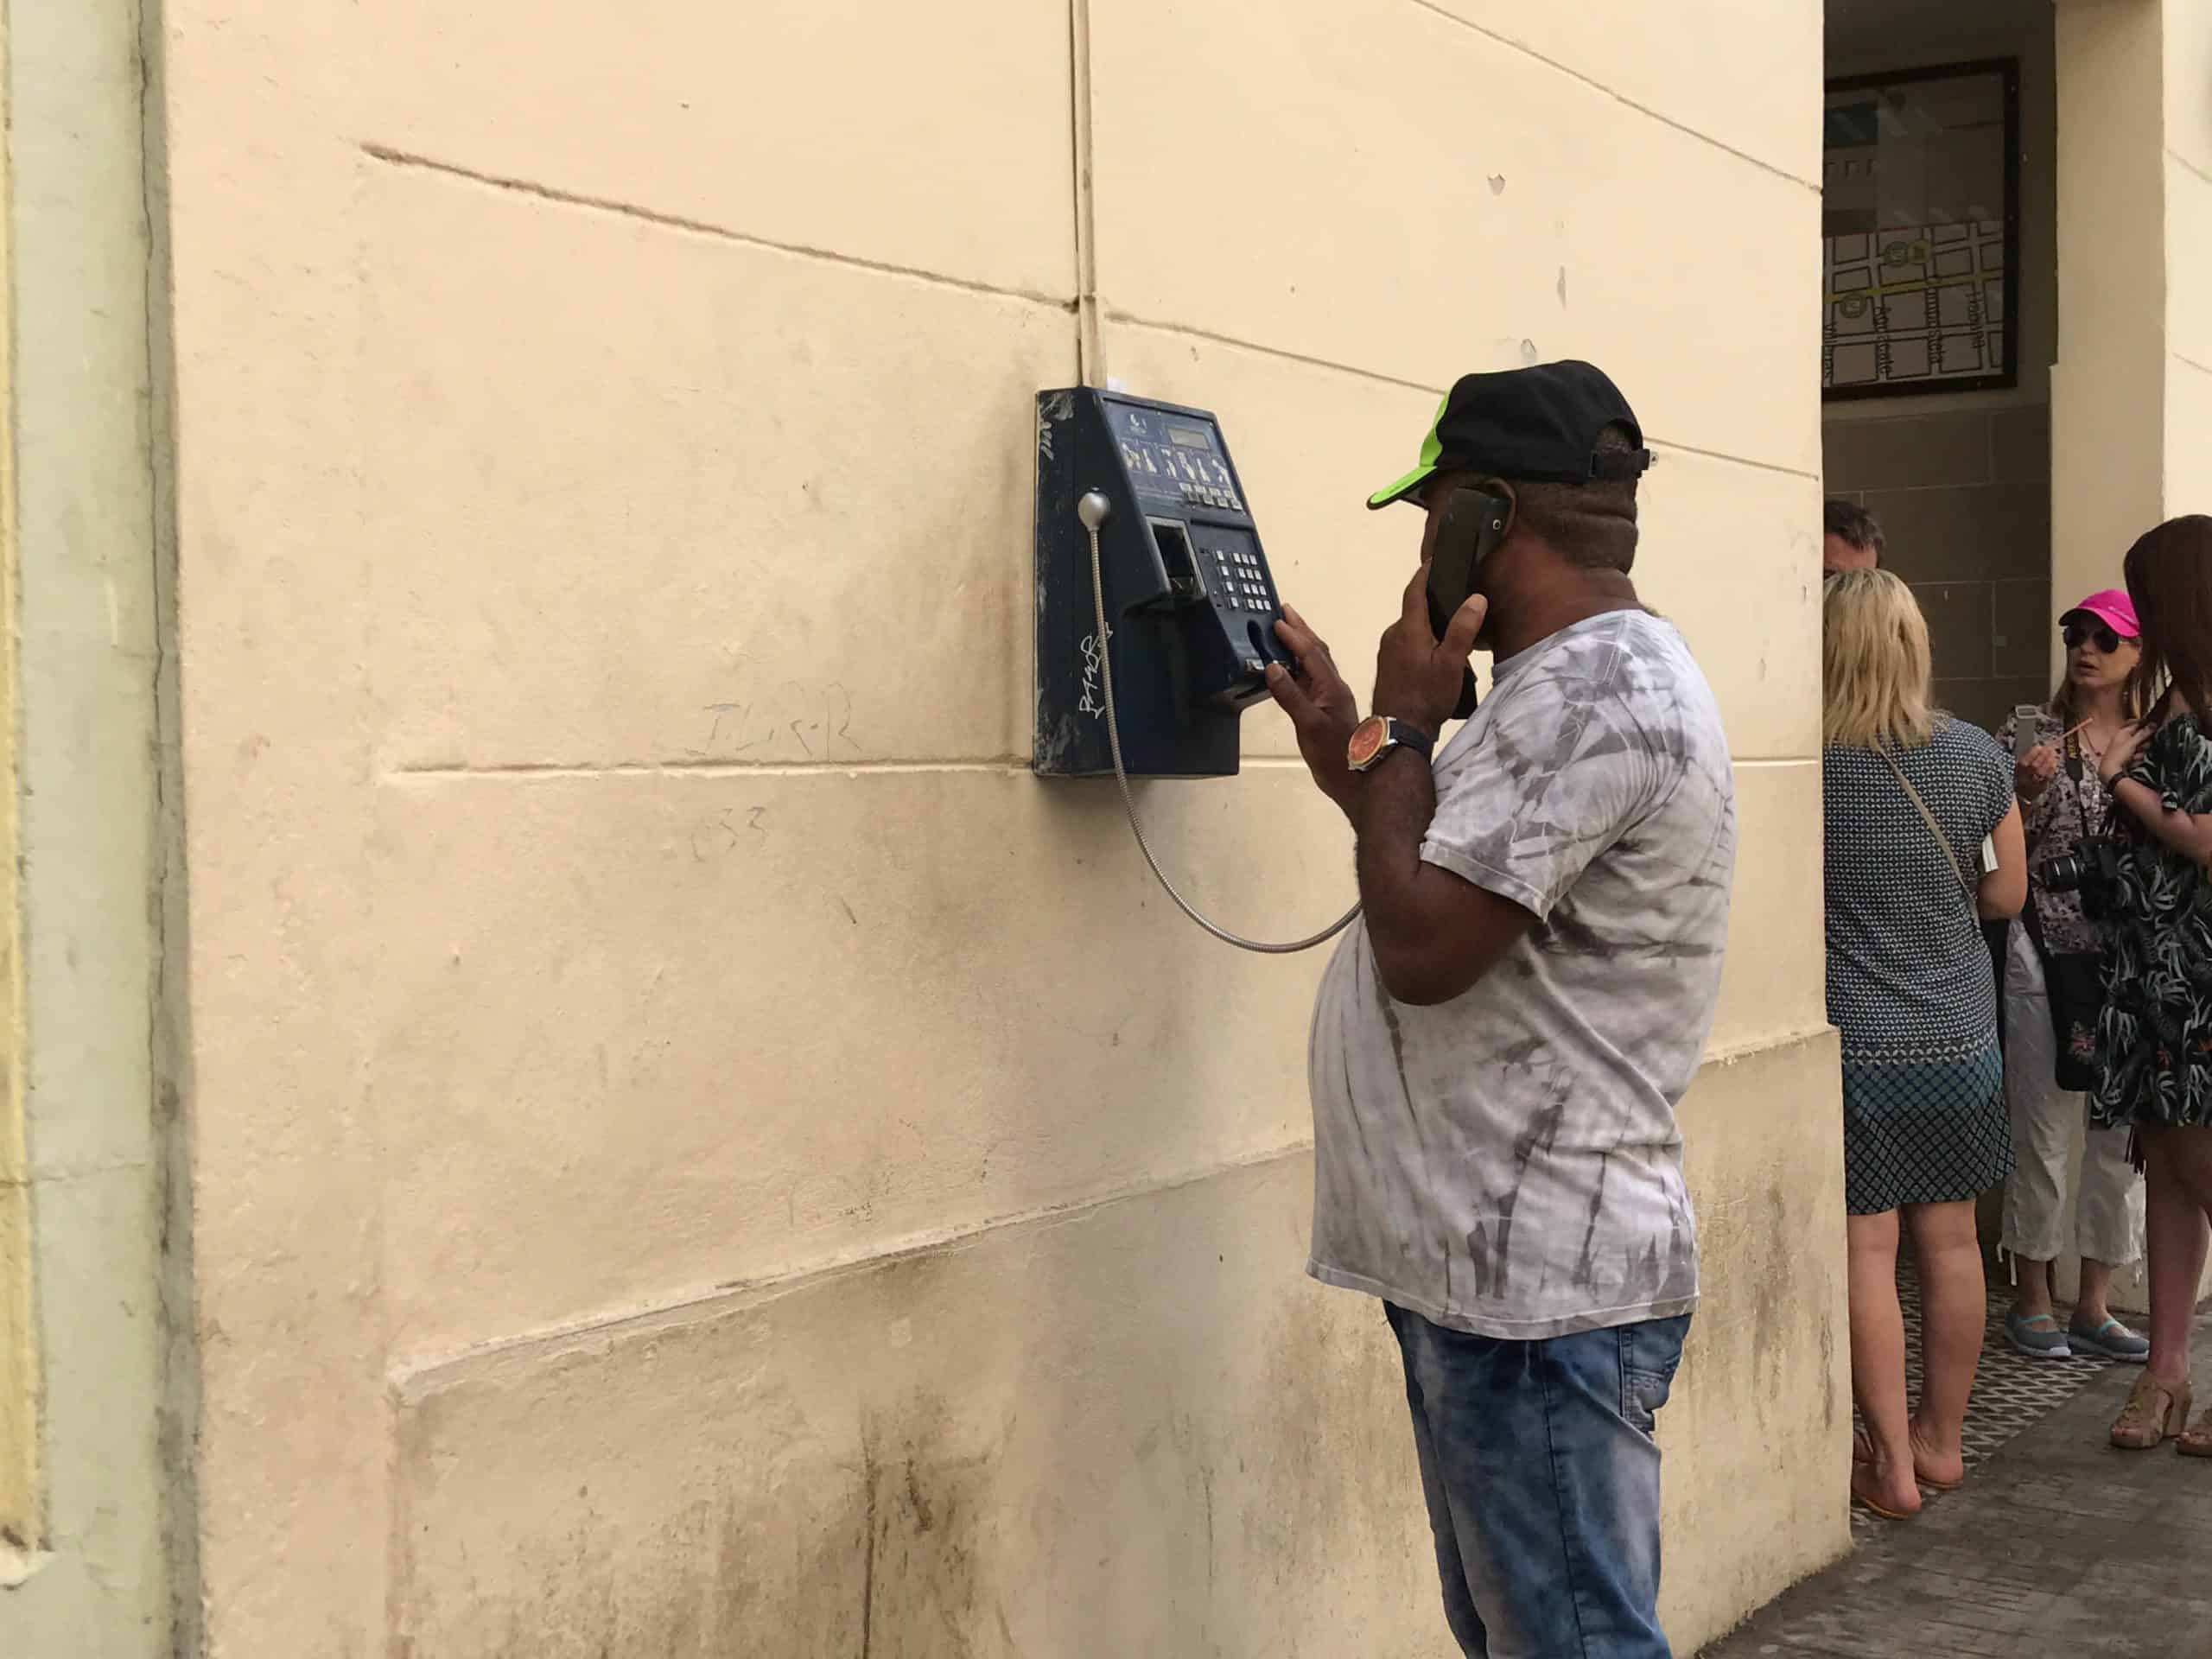 Communications in Cuba